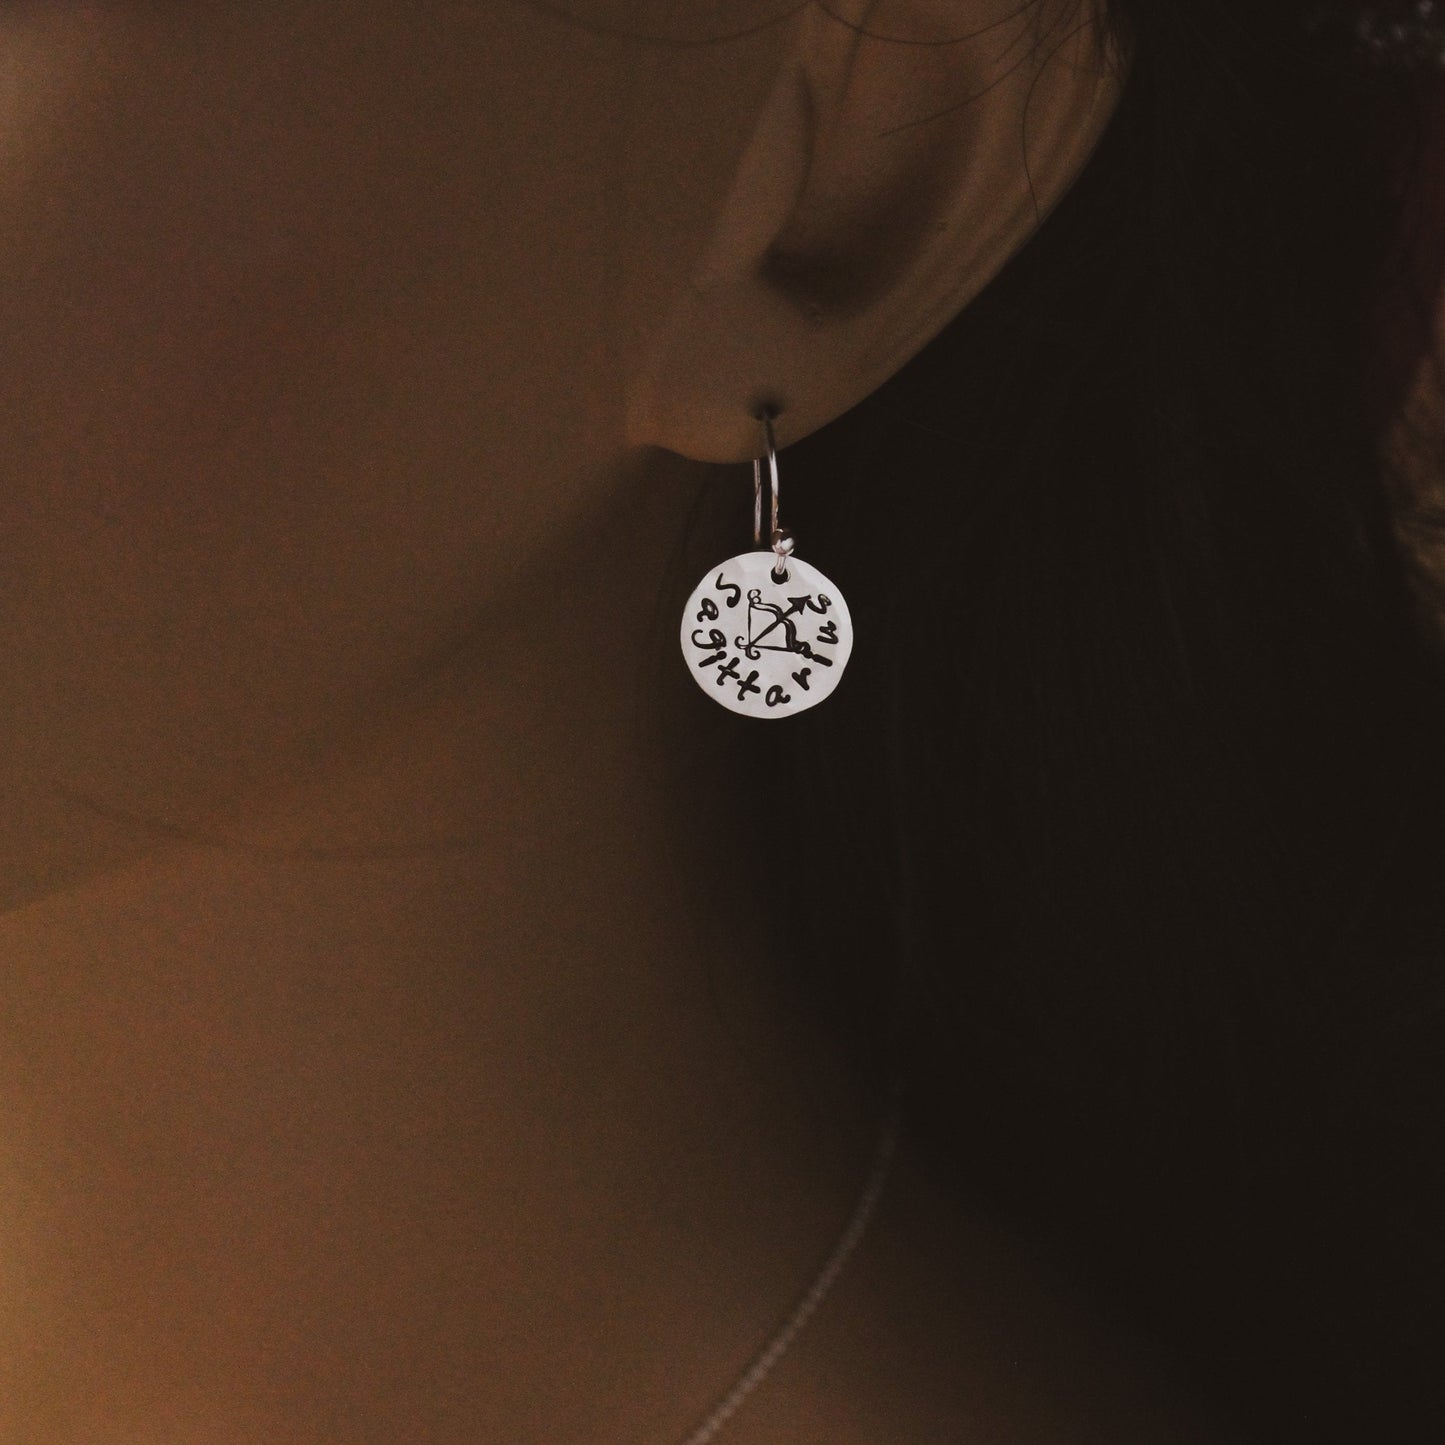 Sagittarius Sterling Silver Earrings, Sagittarius Zodiac Sign Jewelry, Personalized Earrings, Sagittarius Zodiac Jewelry Unique Gift Her